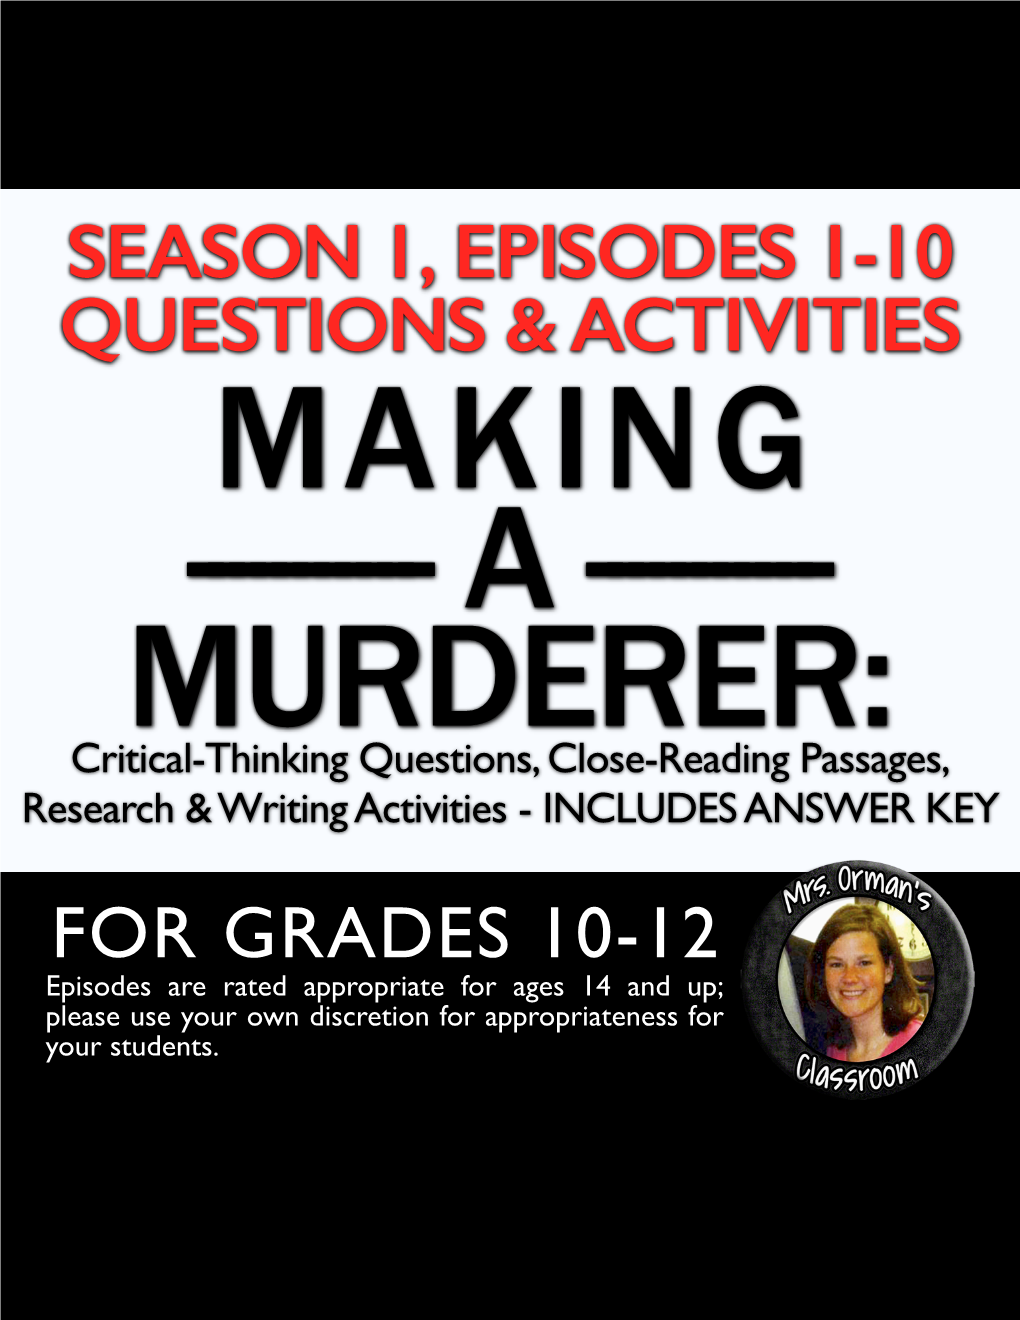 Season 1, Episodes 1-10 Questions & Activities